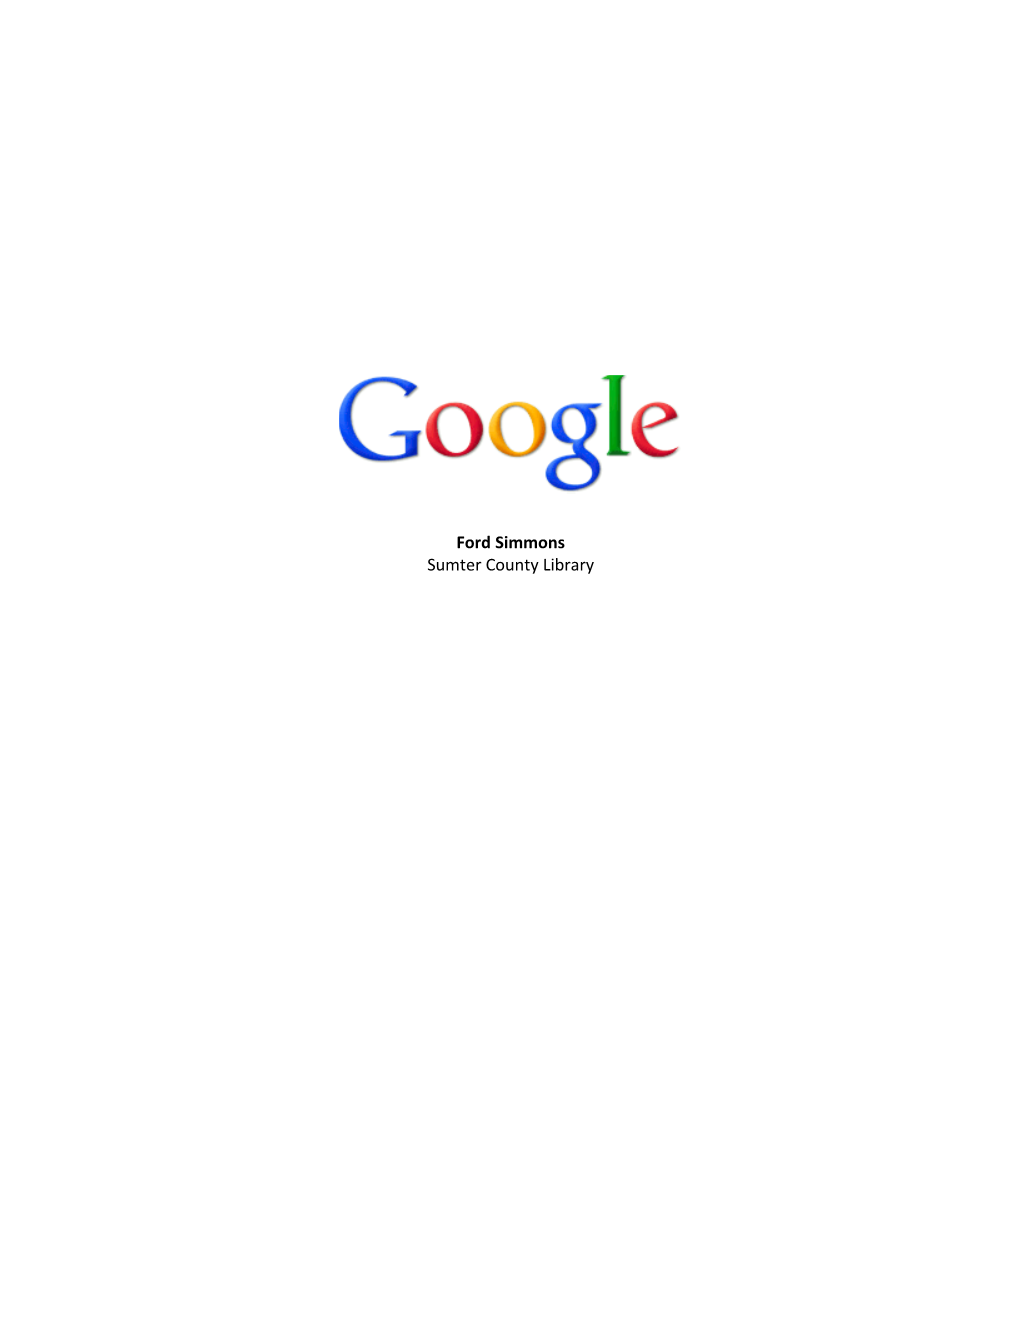 I. a Brief History of Google